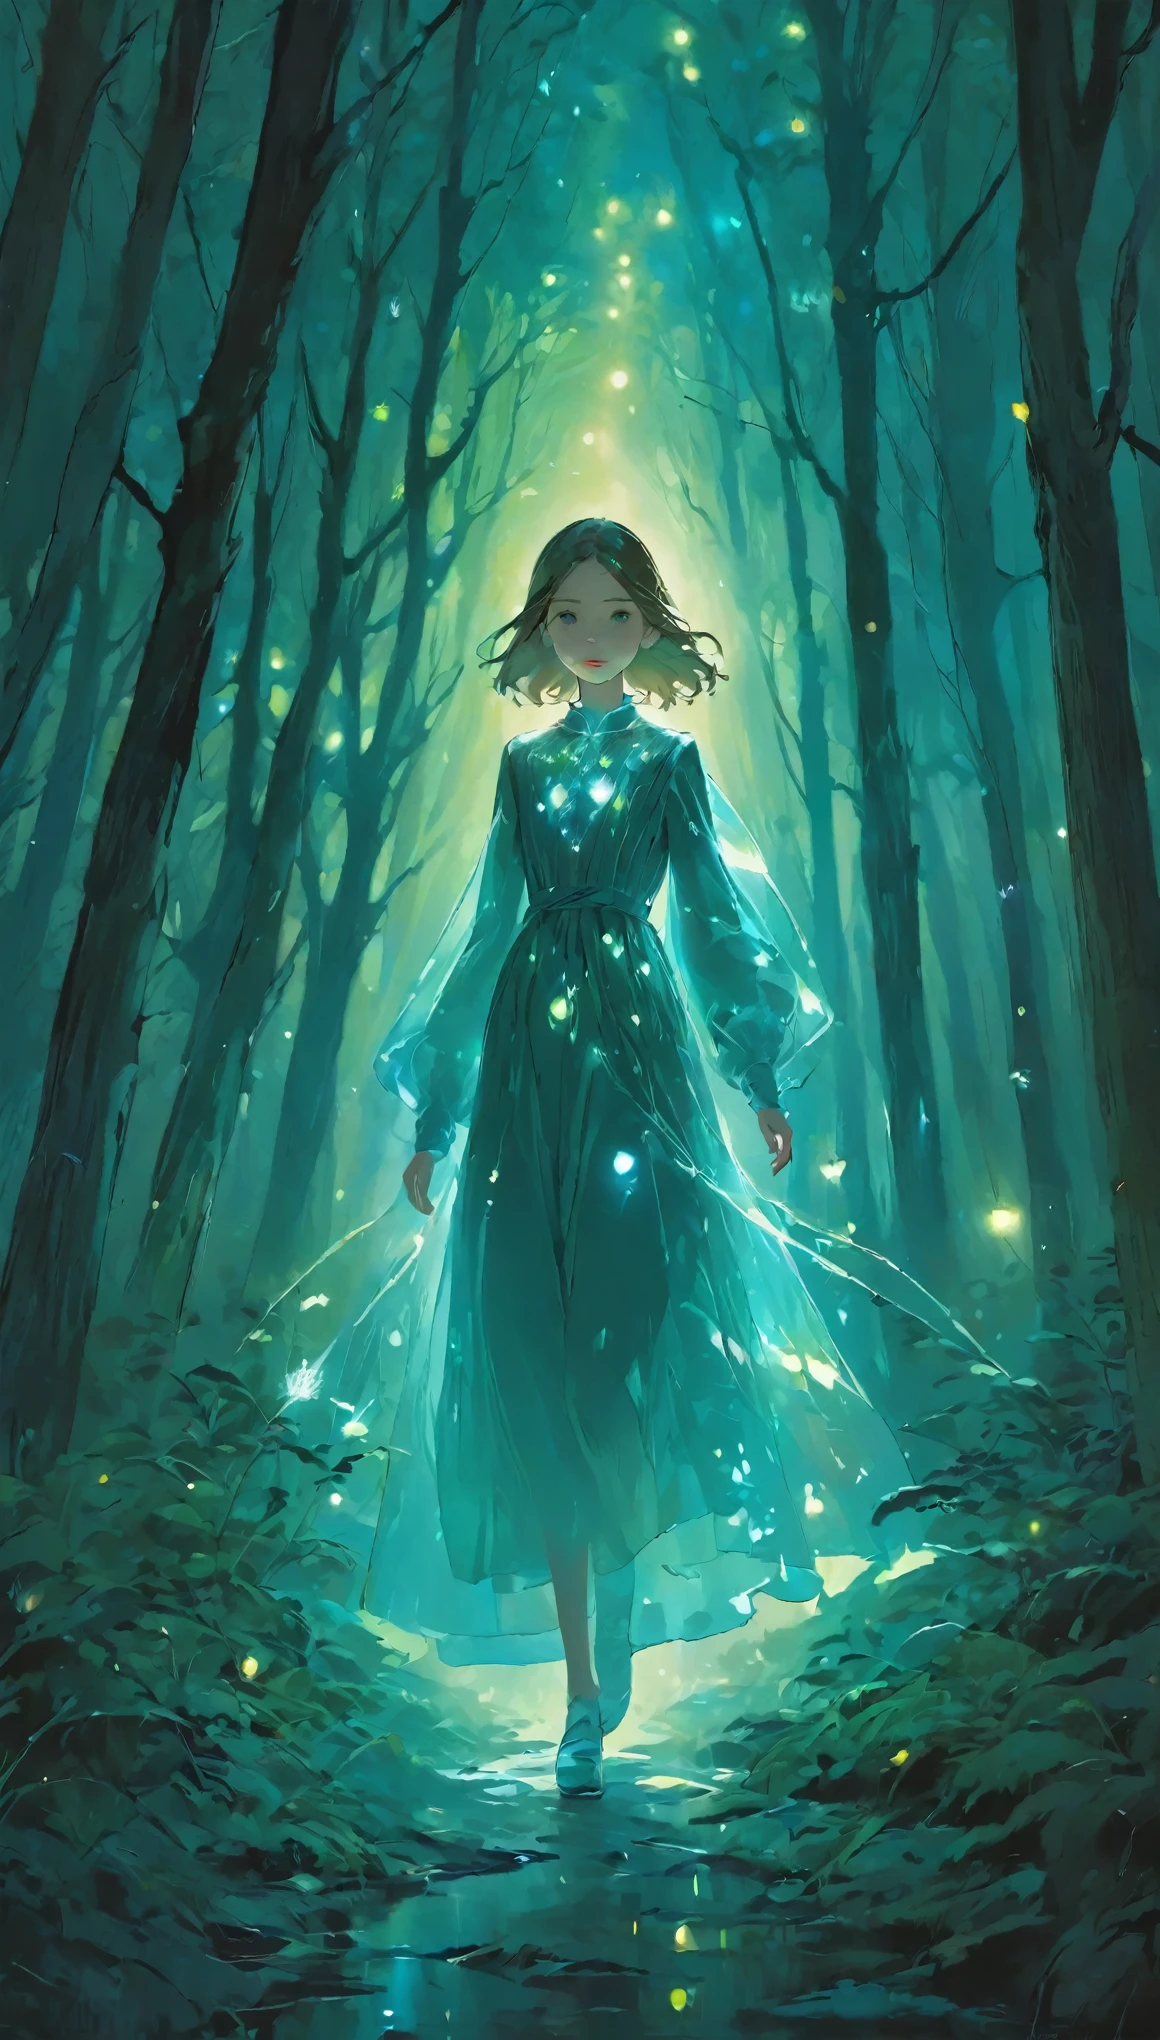 Retrato,Nesta pintura de fantasia,a girl with a translucent glowing corpo wanders through a mysterious forest,Cercado por luzes estranhas,superior_corpo,fundo escuro、Fundo inorgânico、Iluminar